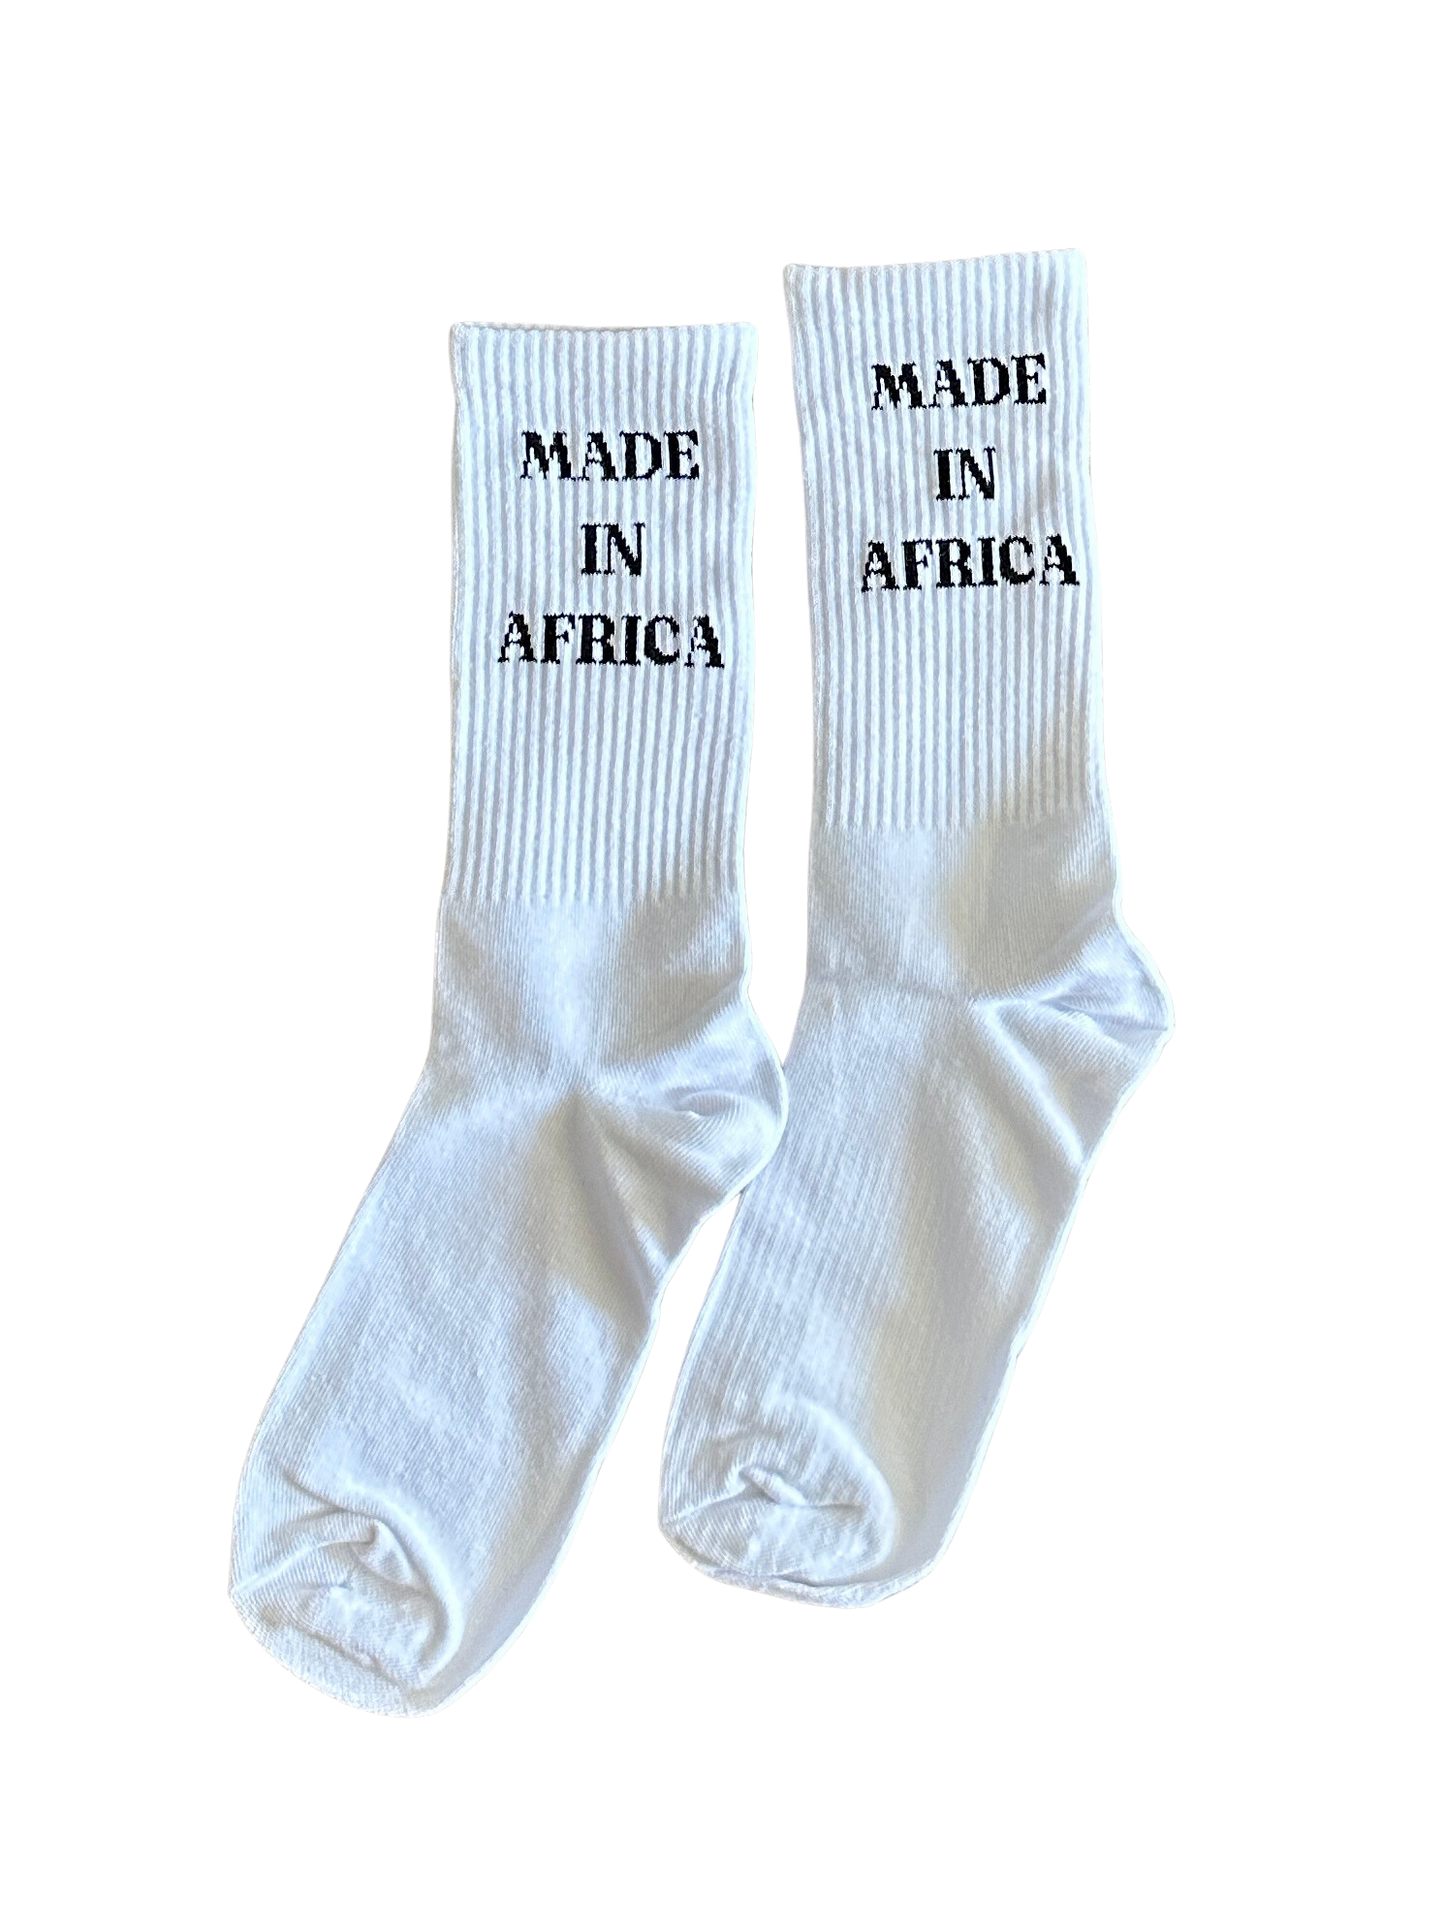 Made in Africa Socks